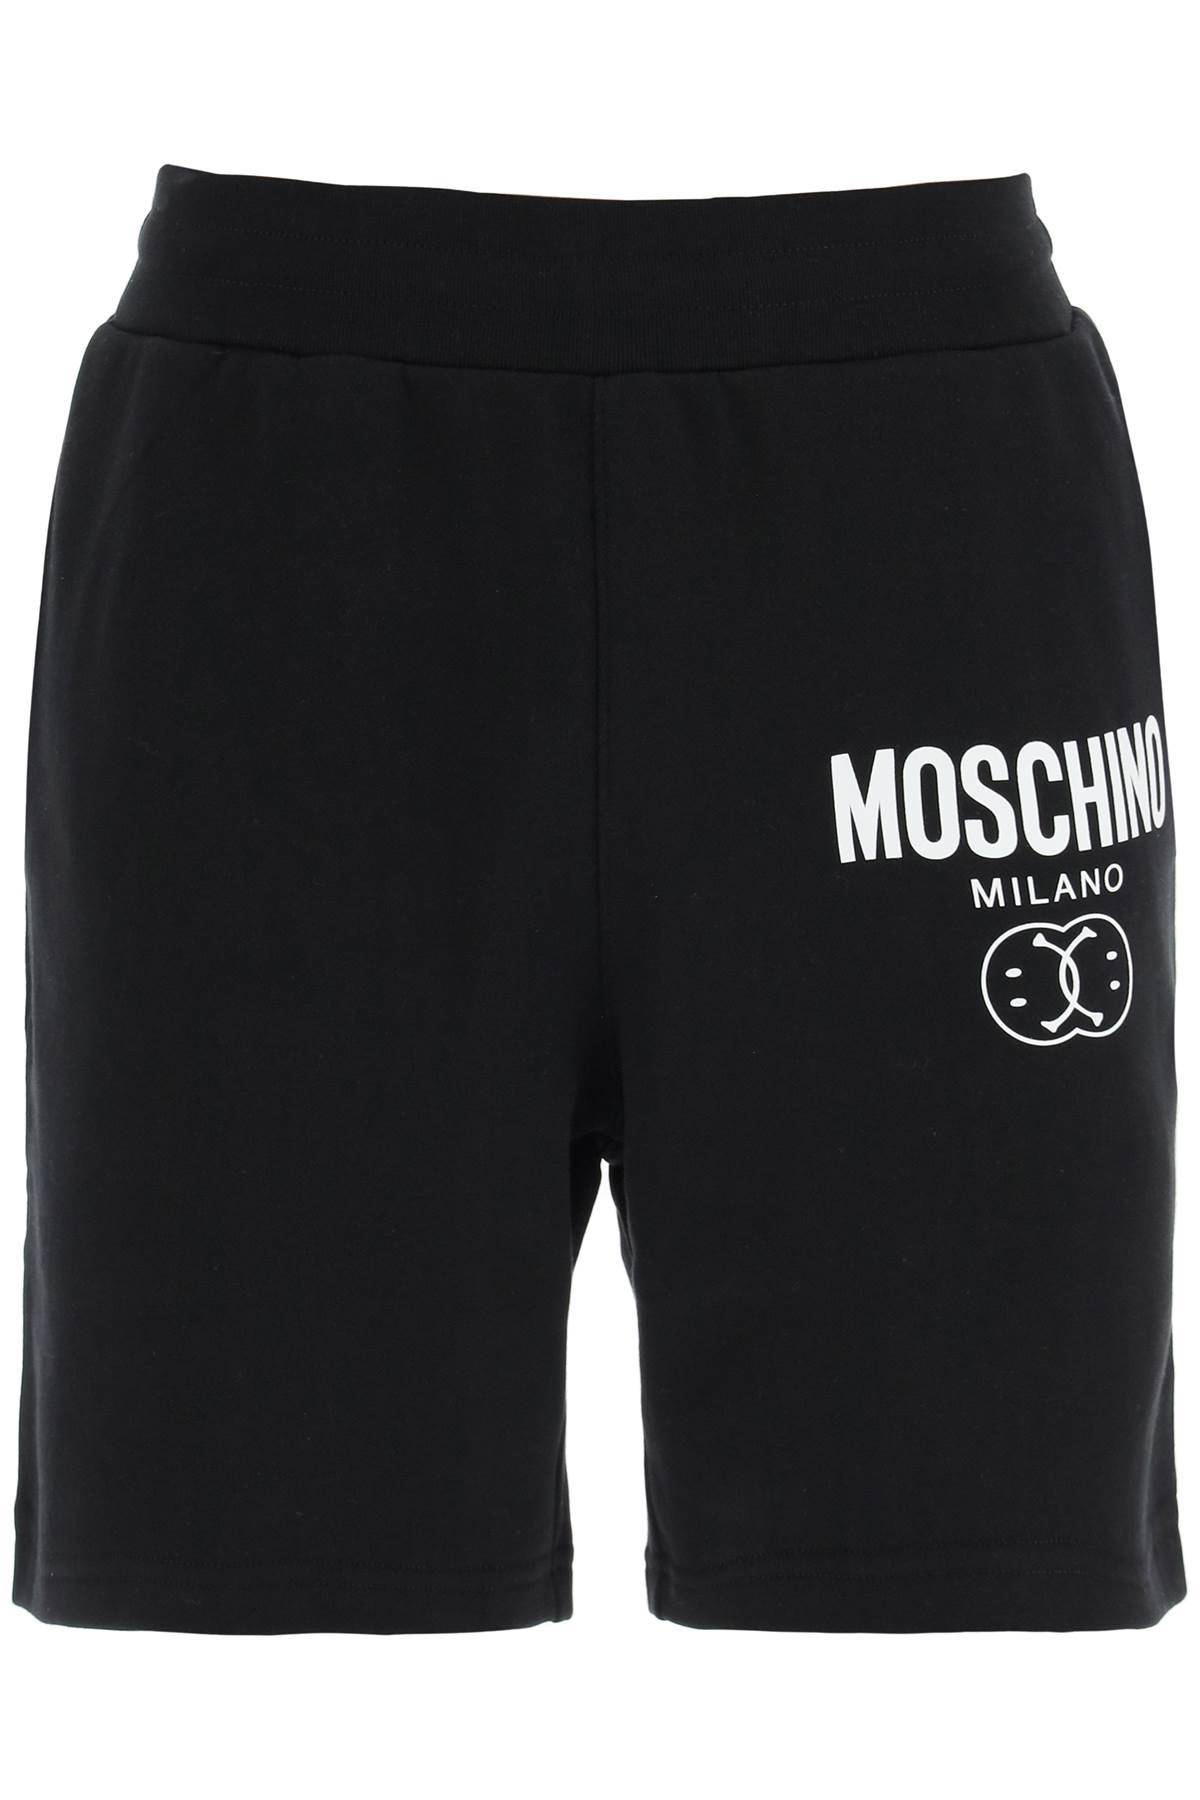 Moschino MOSCHINO 'double question mark' logo sweatshorts